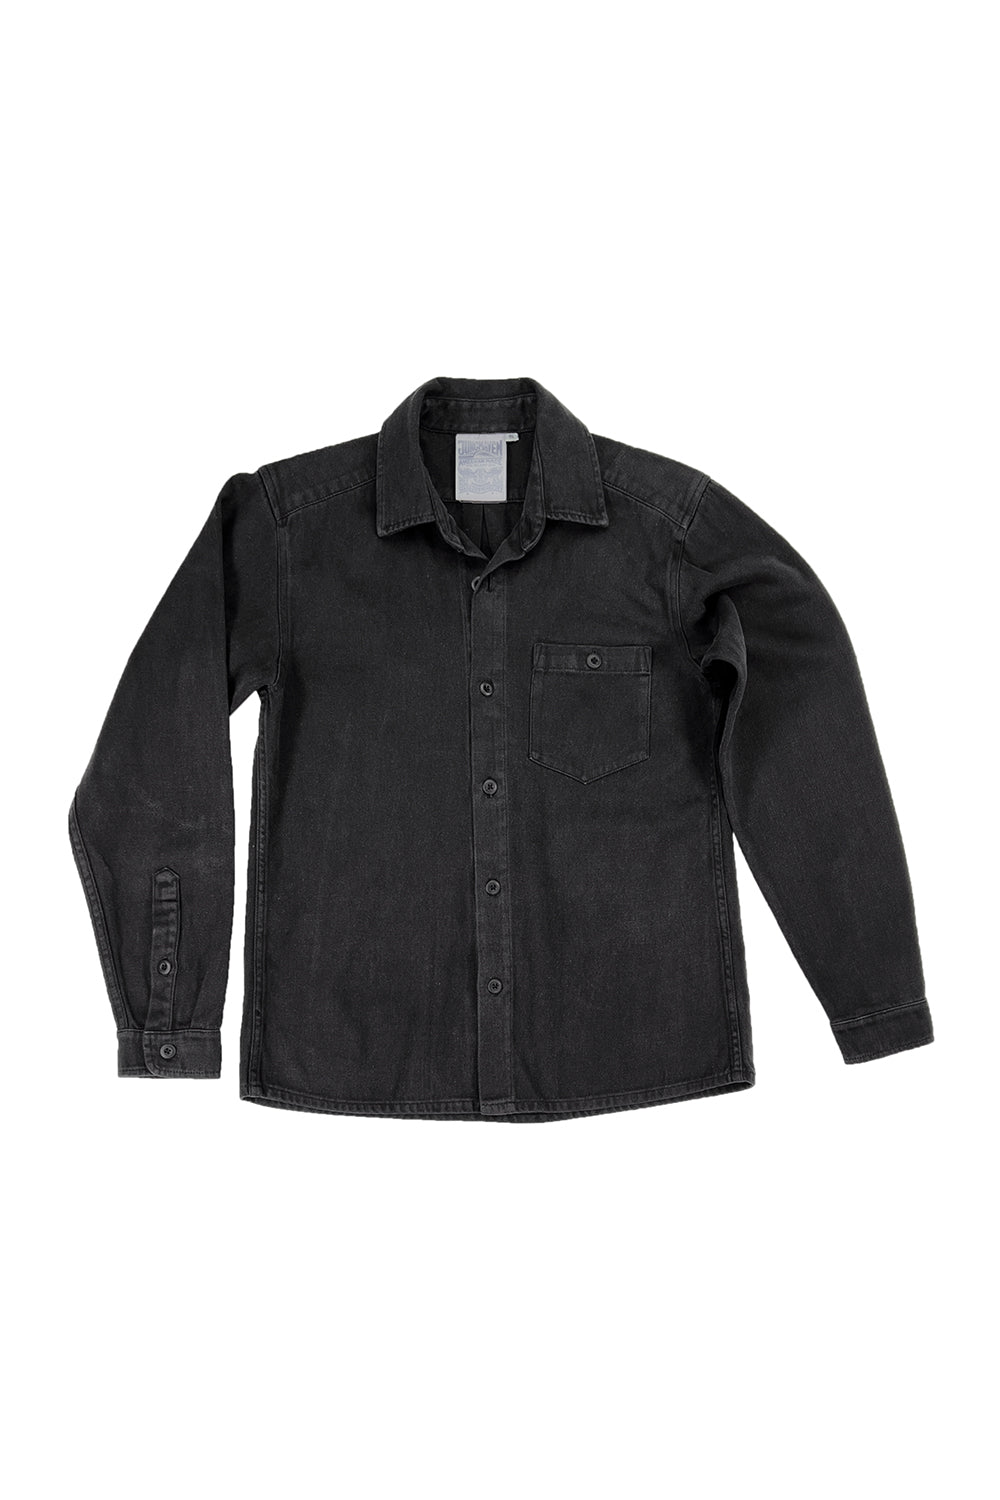 Topanga Shirt | Jungmaven Hemp Clothing & Accessories / Color: Black